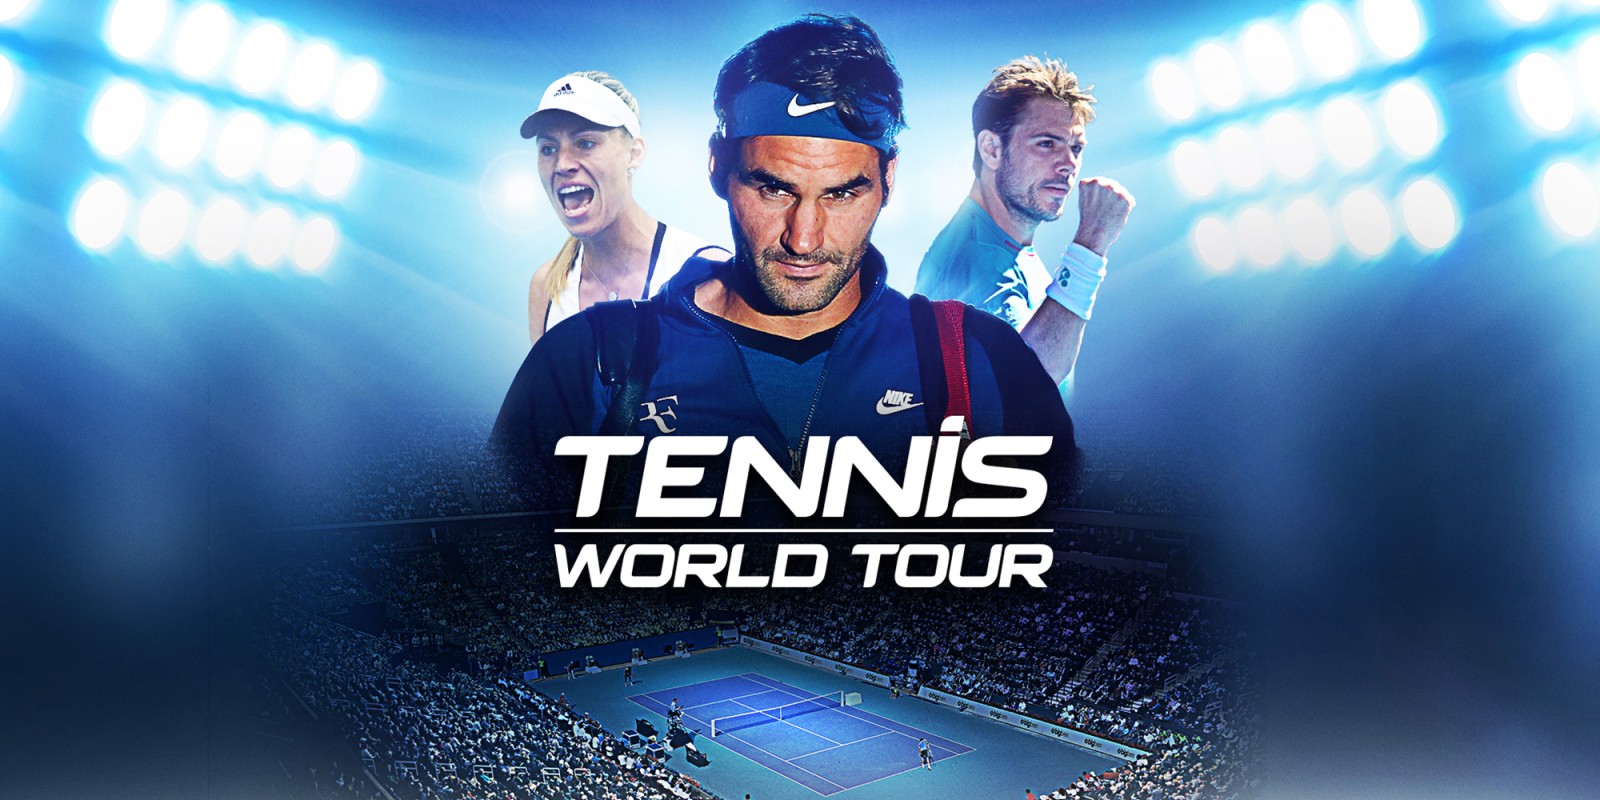 Tennis World Tour H2x1_NSwitch_TennisWorldTour_image1600w